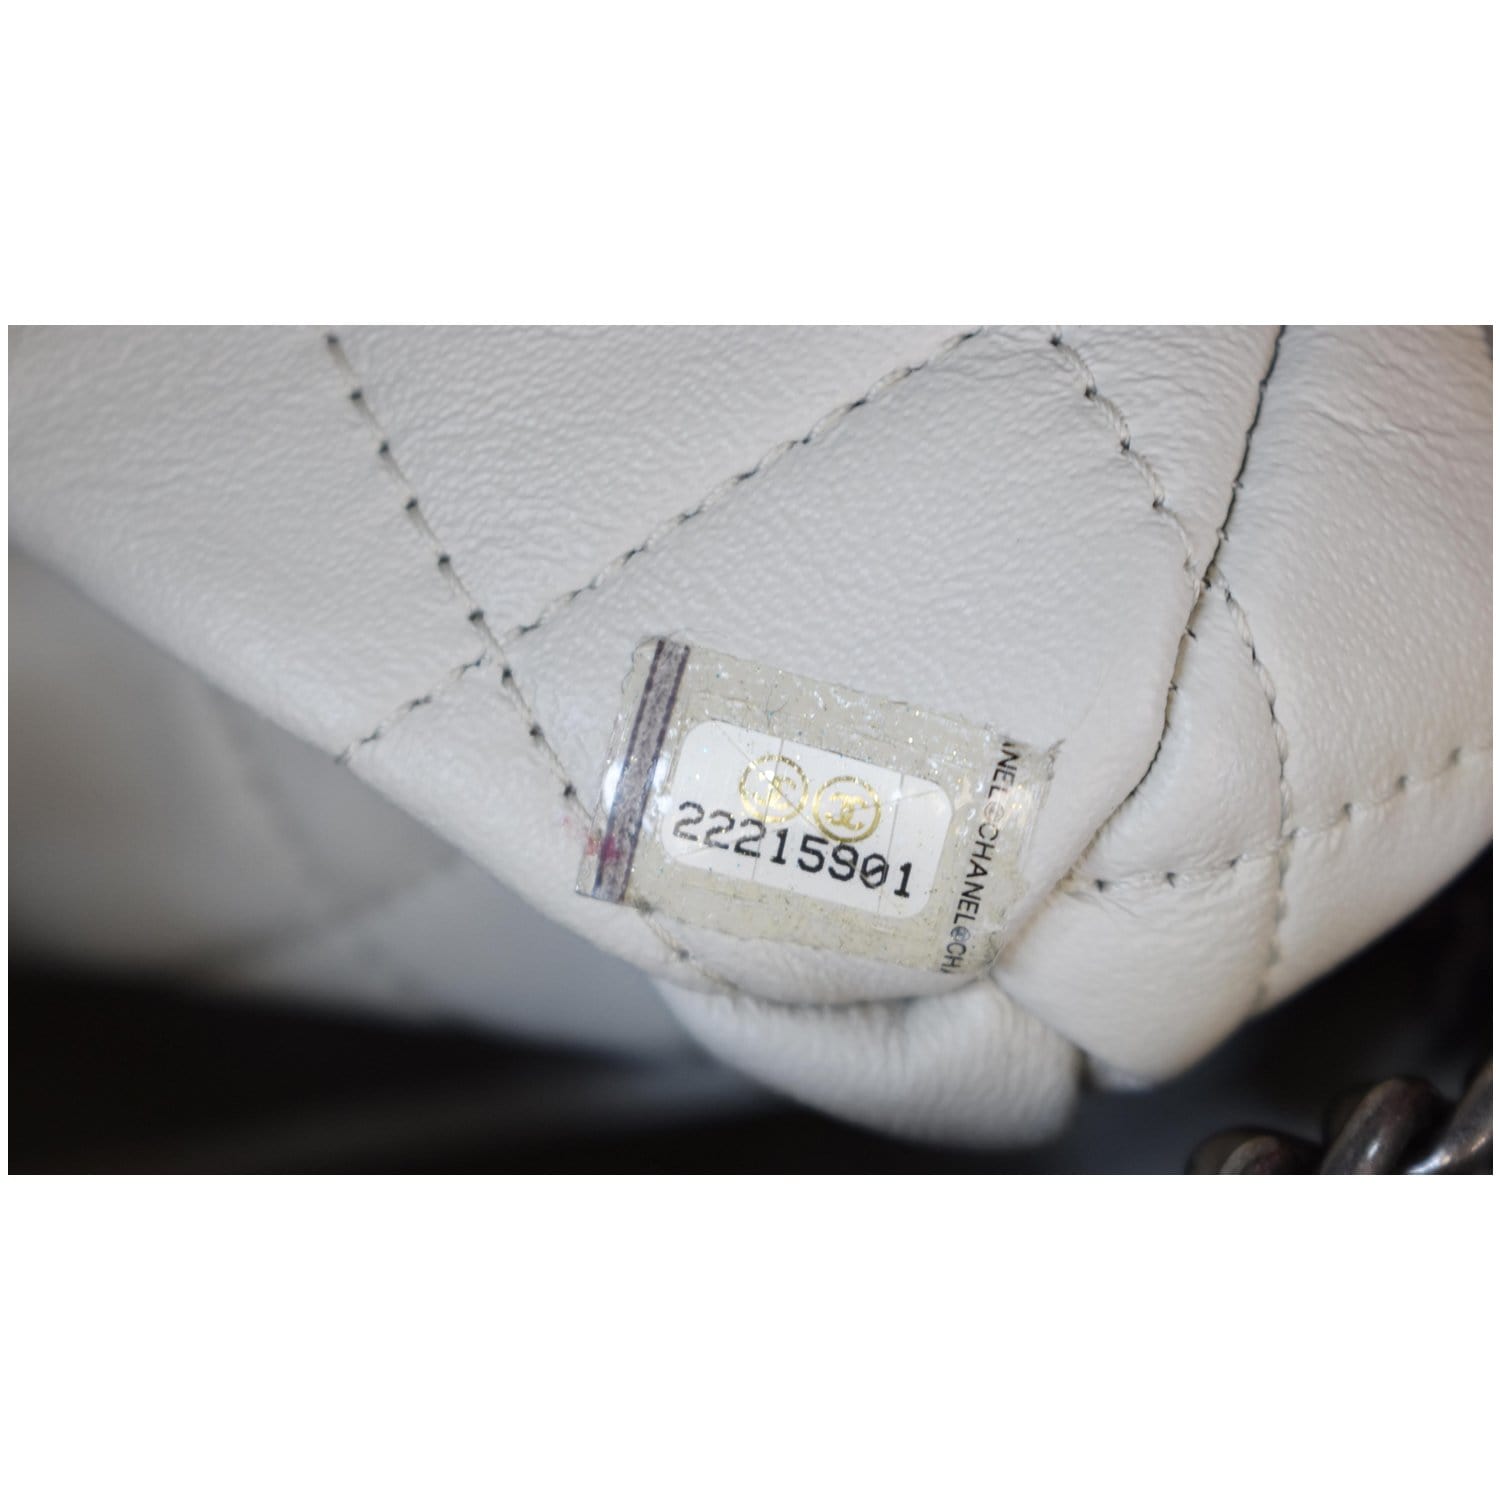 Chanel Urban Luxury Drawstring Calfskin Stitched Bag